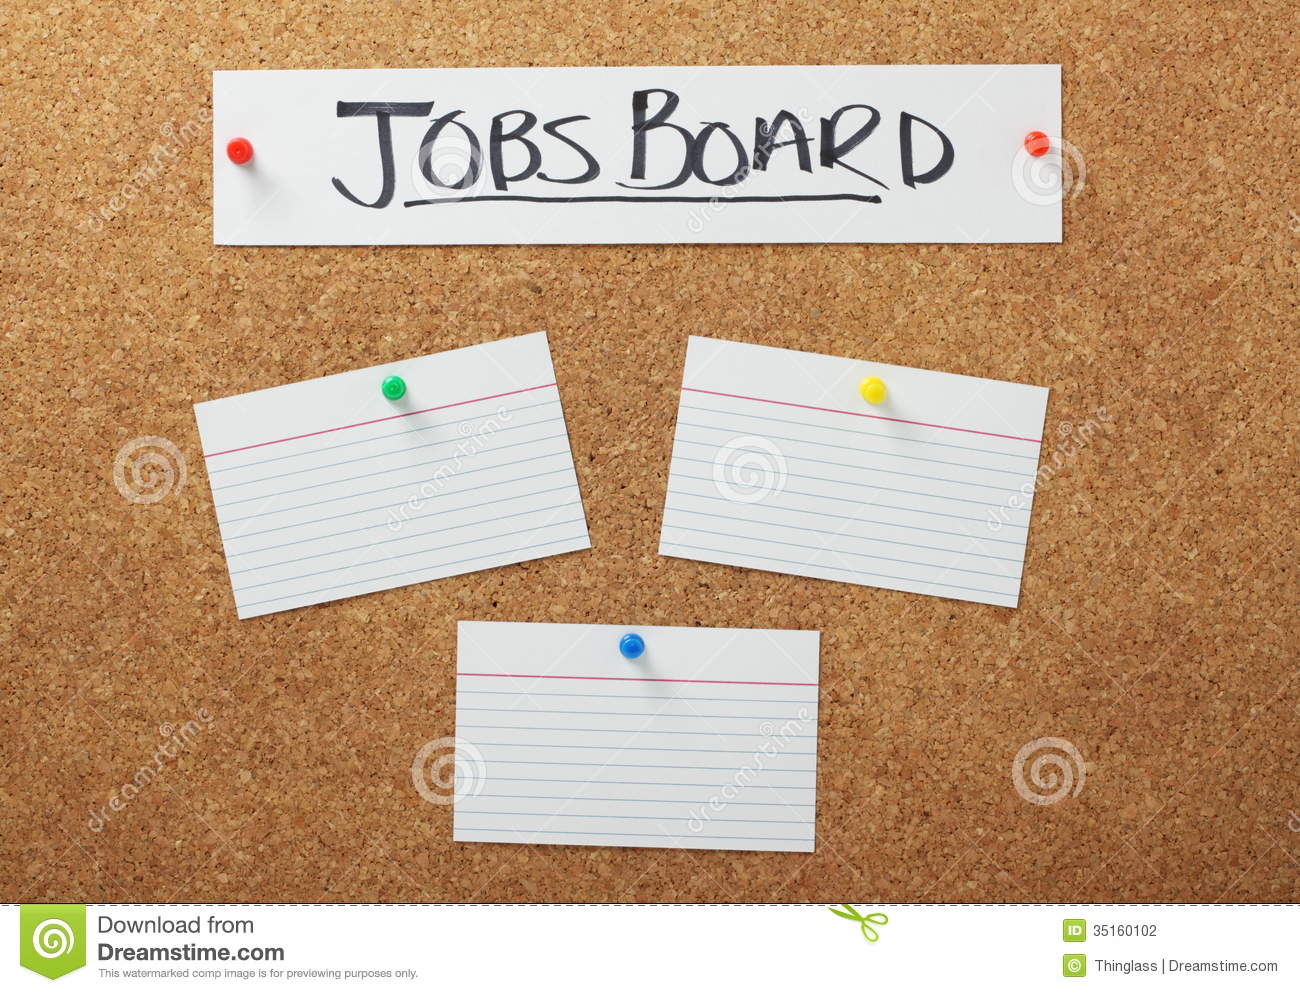 Employment Opportunities Job Board